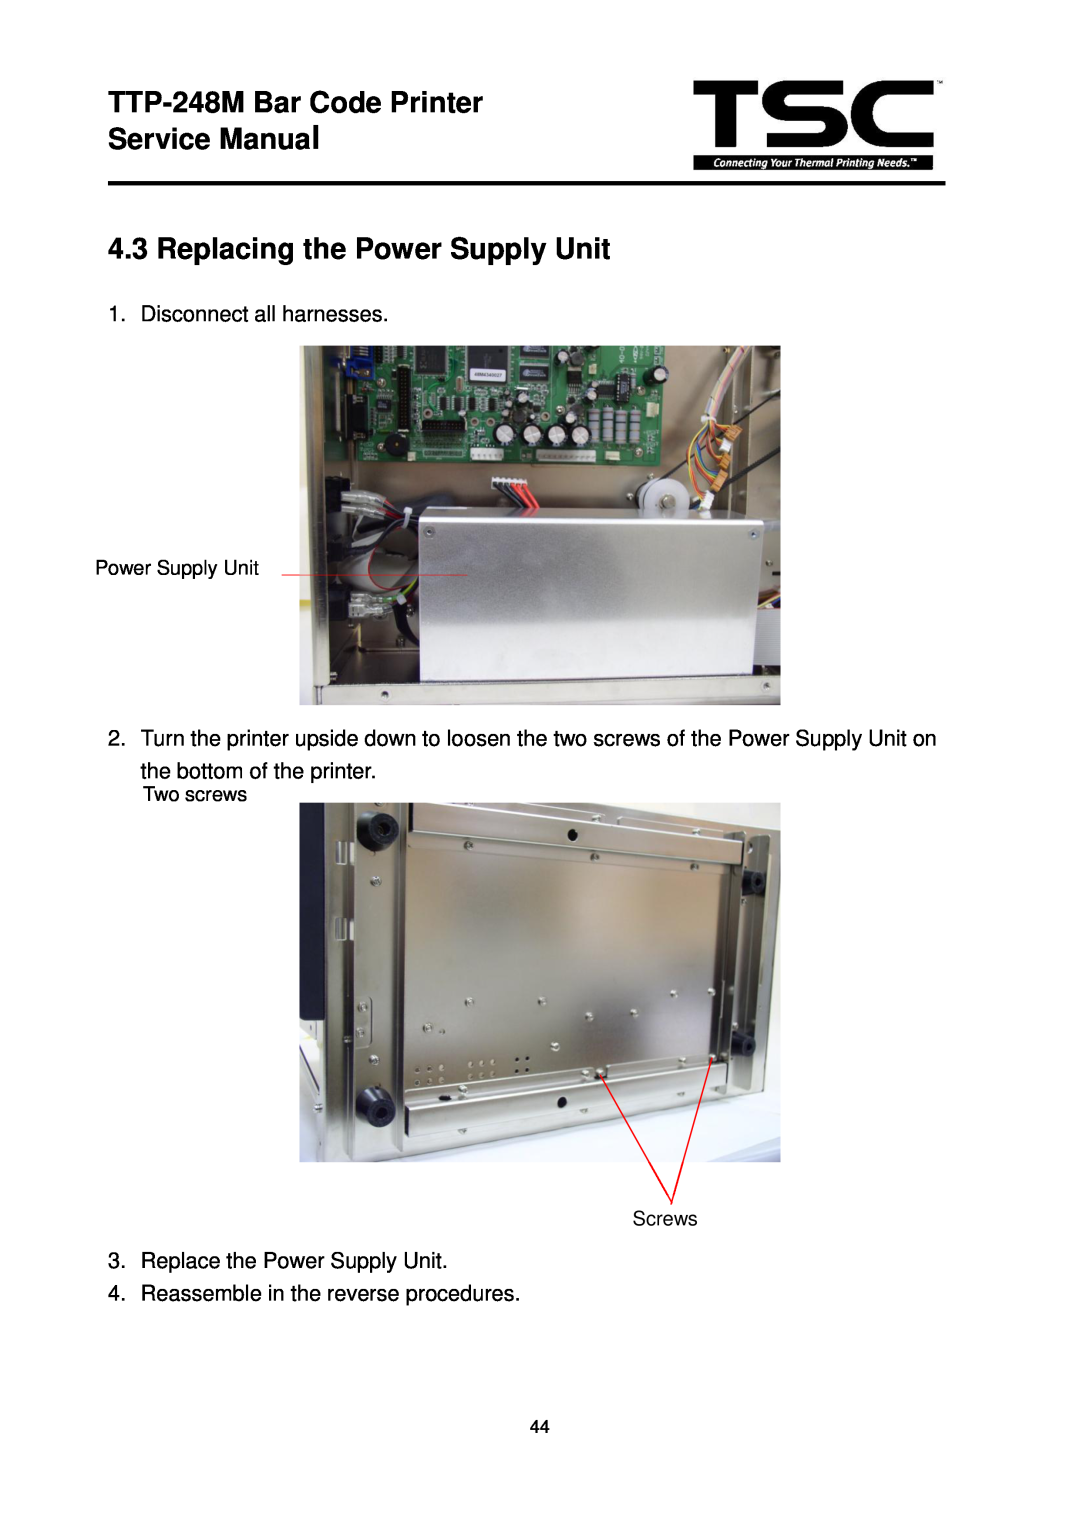 The Speaker Company TTP 248M Replacing the Power Supply Unit, TTP-248M Bar Code Printer Service Manual, Two screws Screws 